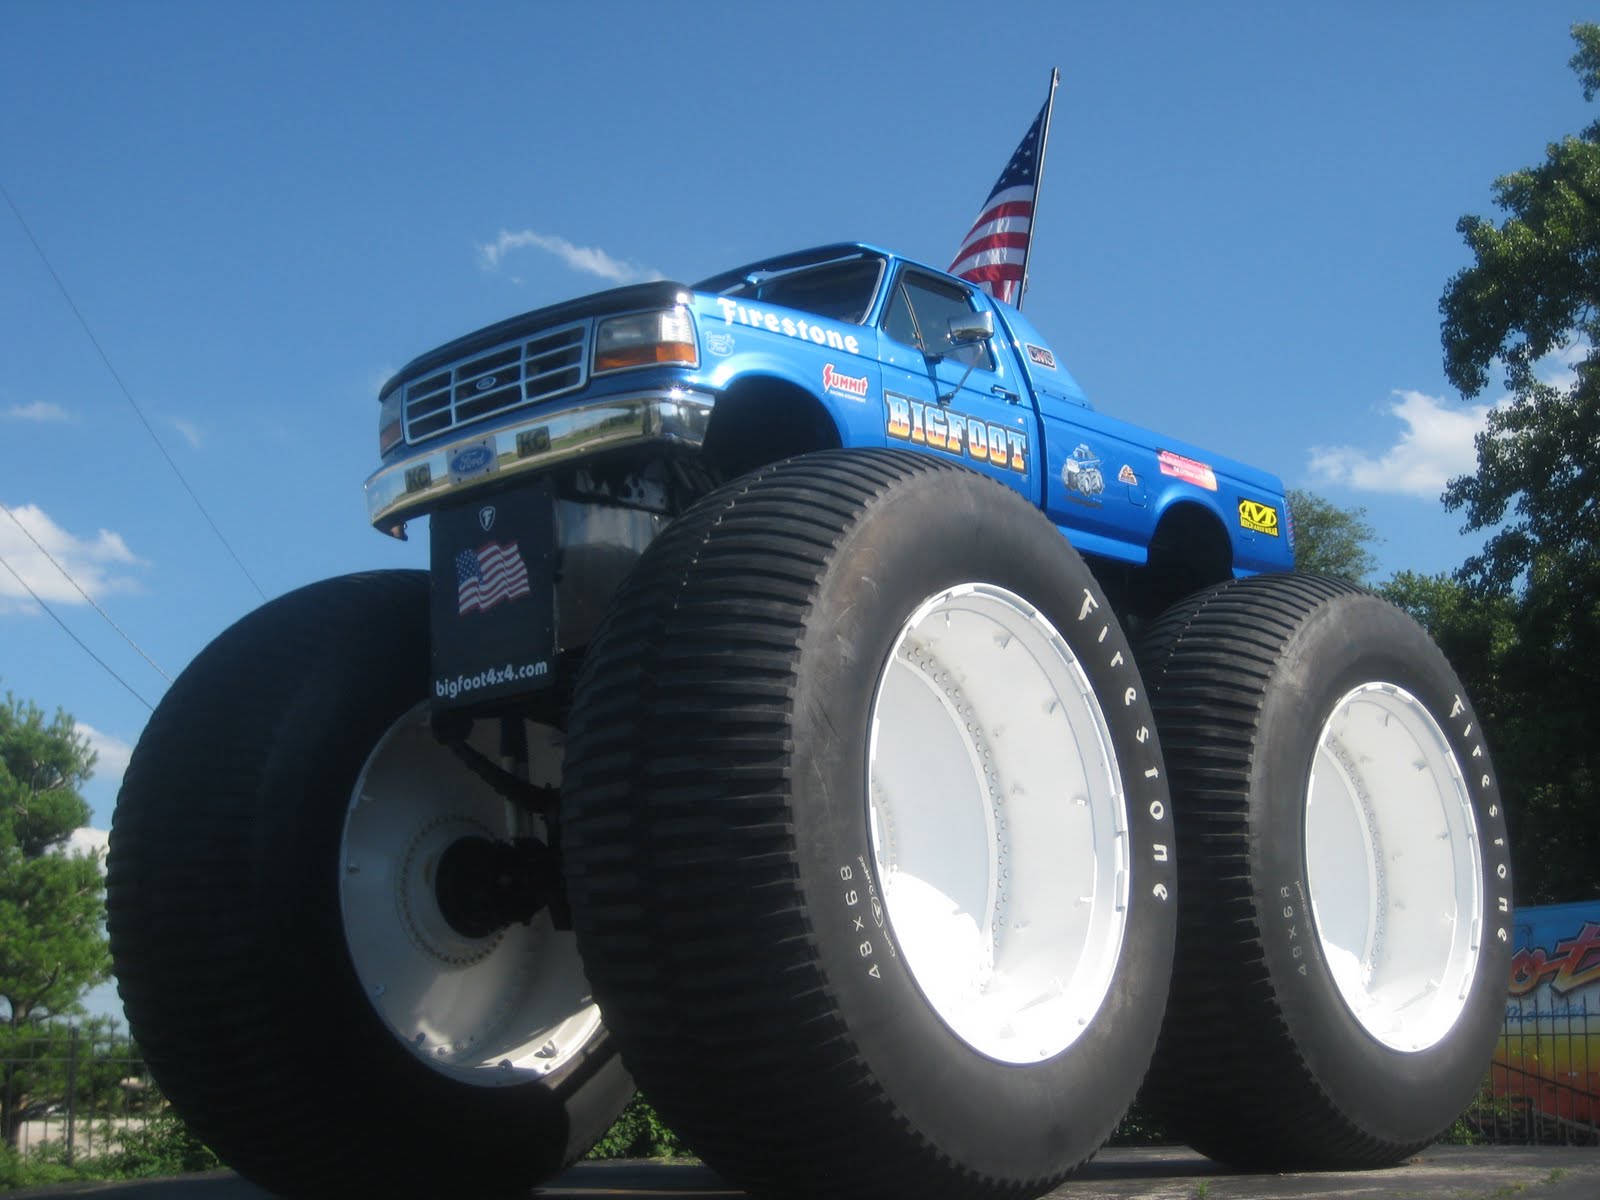 1/25 Bigfoot ford monster truck #4